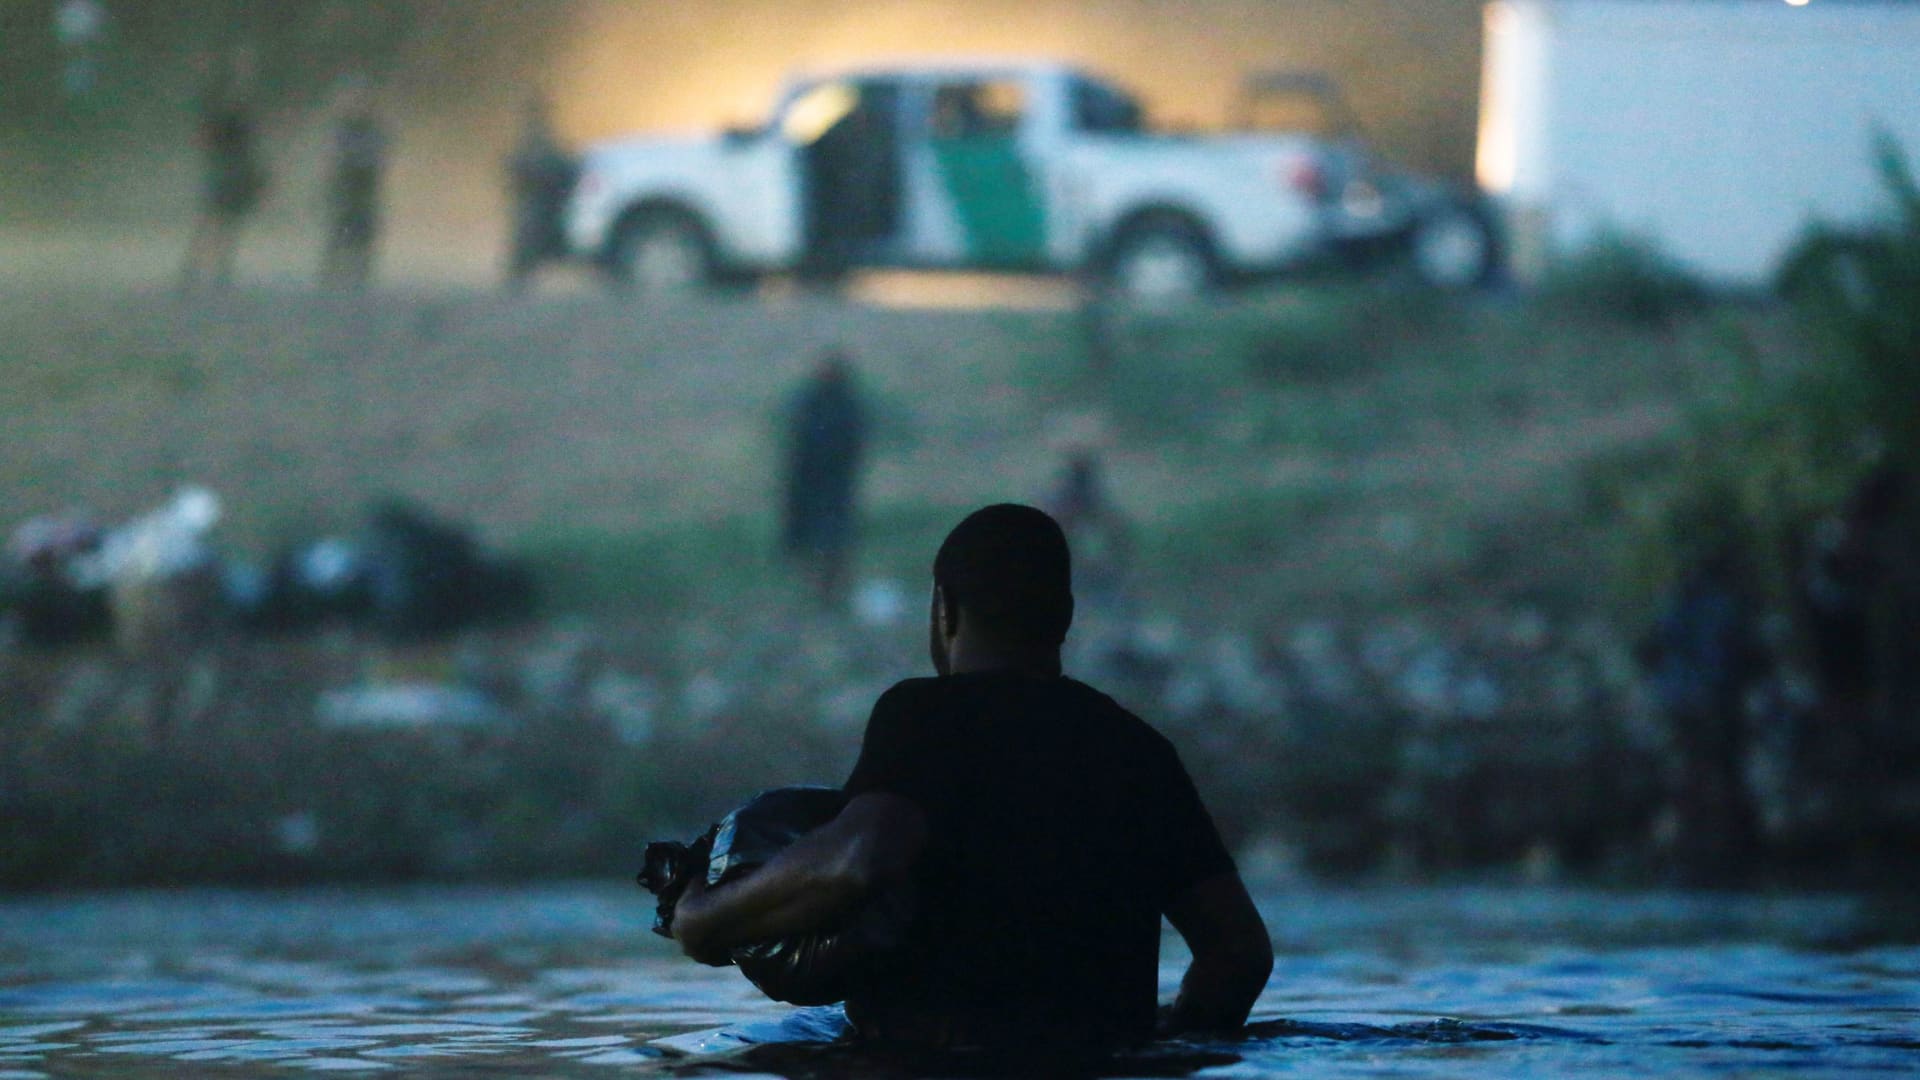 A migrant seeking refuge in the U.S. wades through the Rio Grande river from Ciudad Acuna, Mexico toward Del Rio, Texas, U.S. after getting supplies, in Ciudad Acuna, Mexico September 22, 2021.